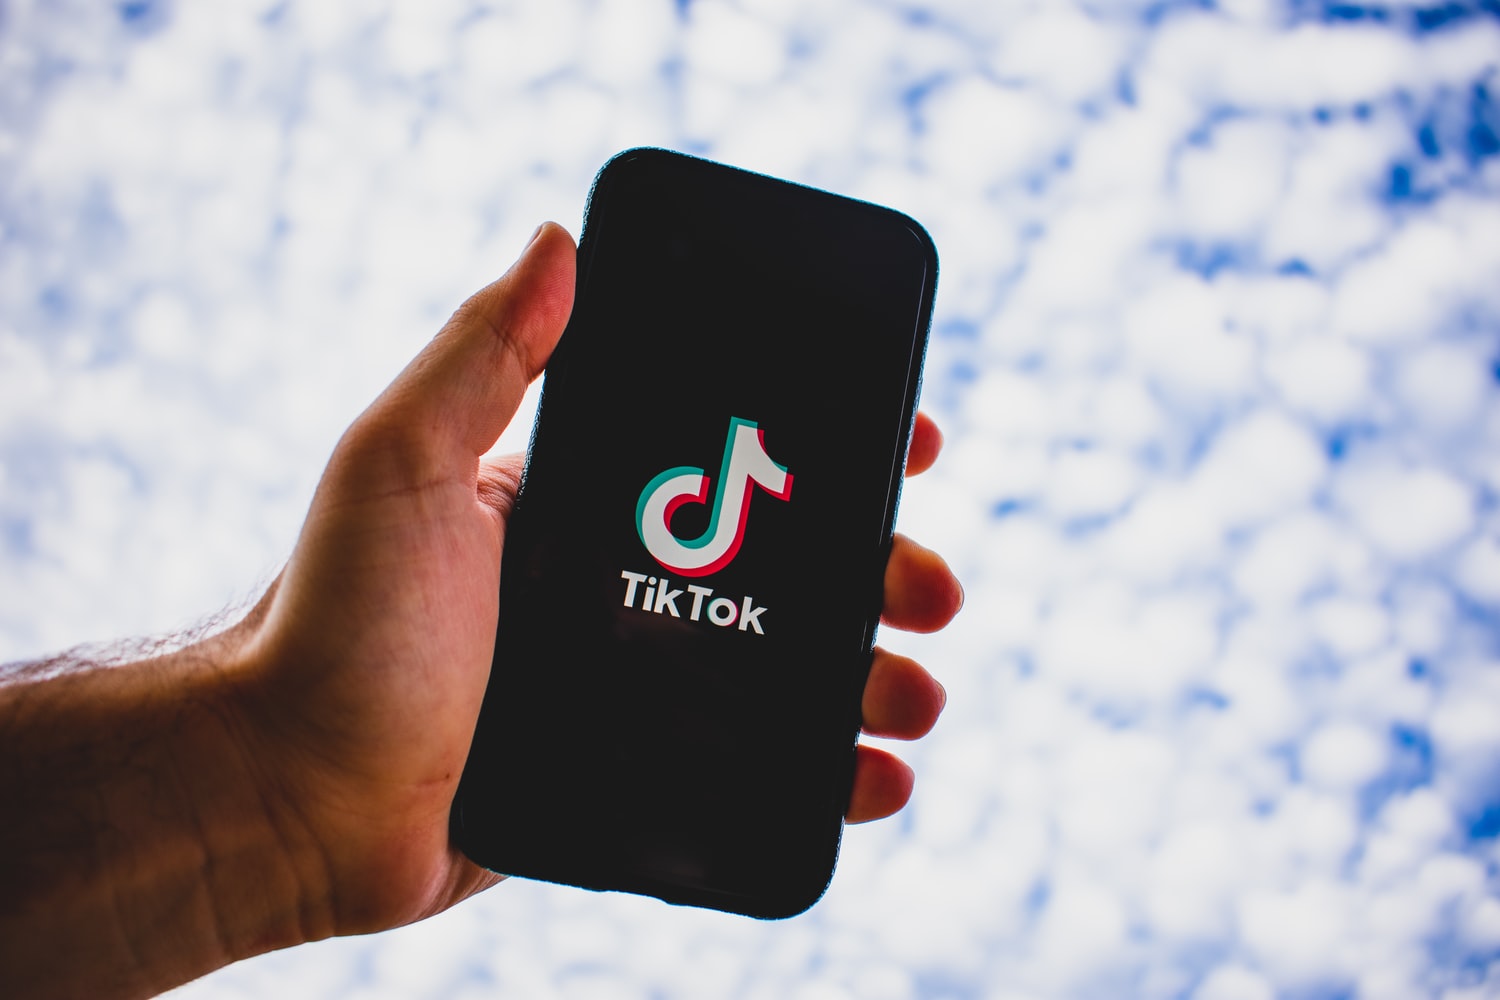 Tik Tok influencer marketing in the fashion industry | Tik Tok 2020